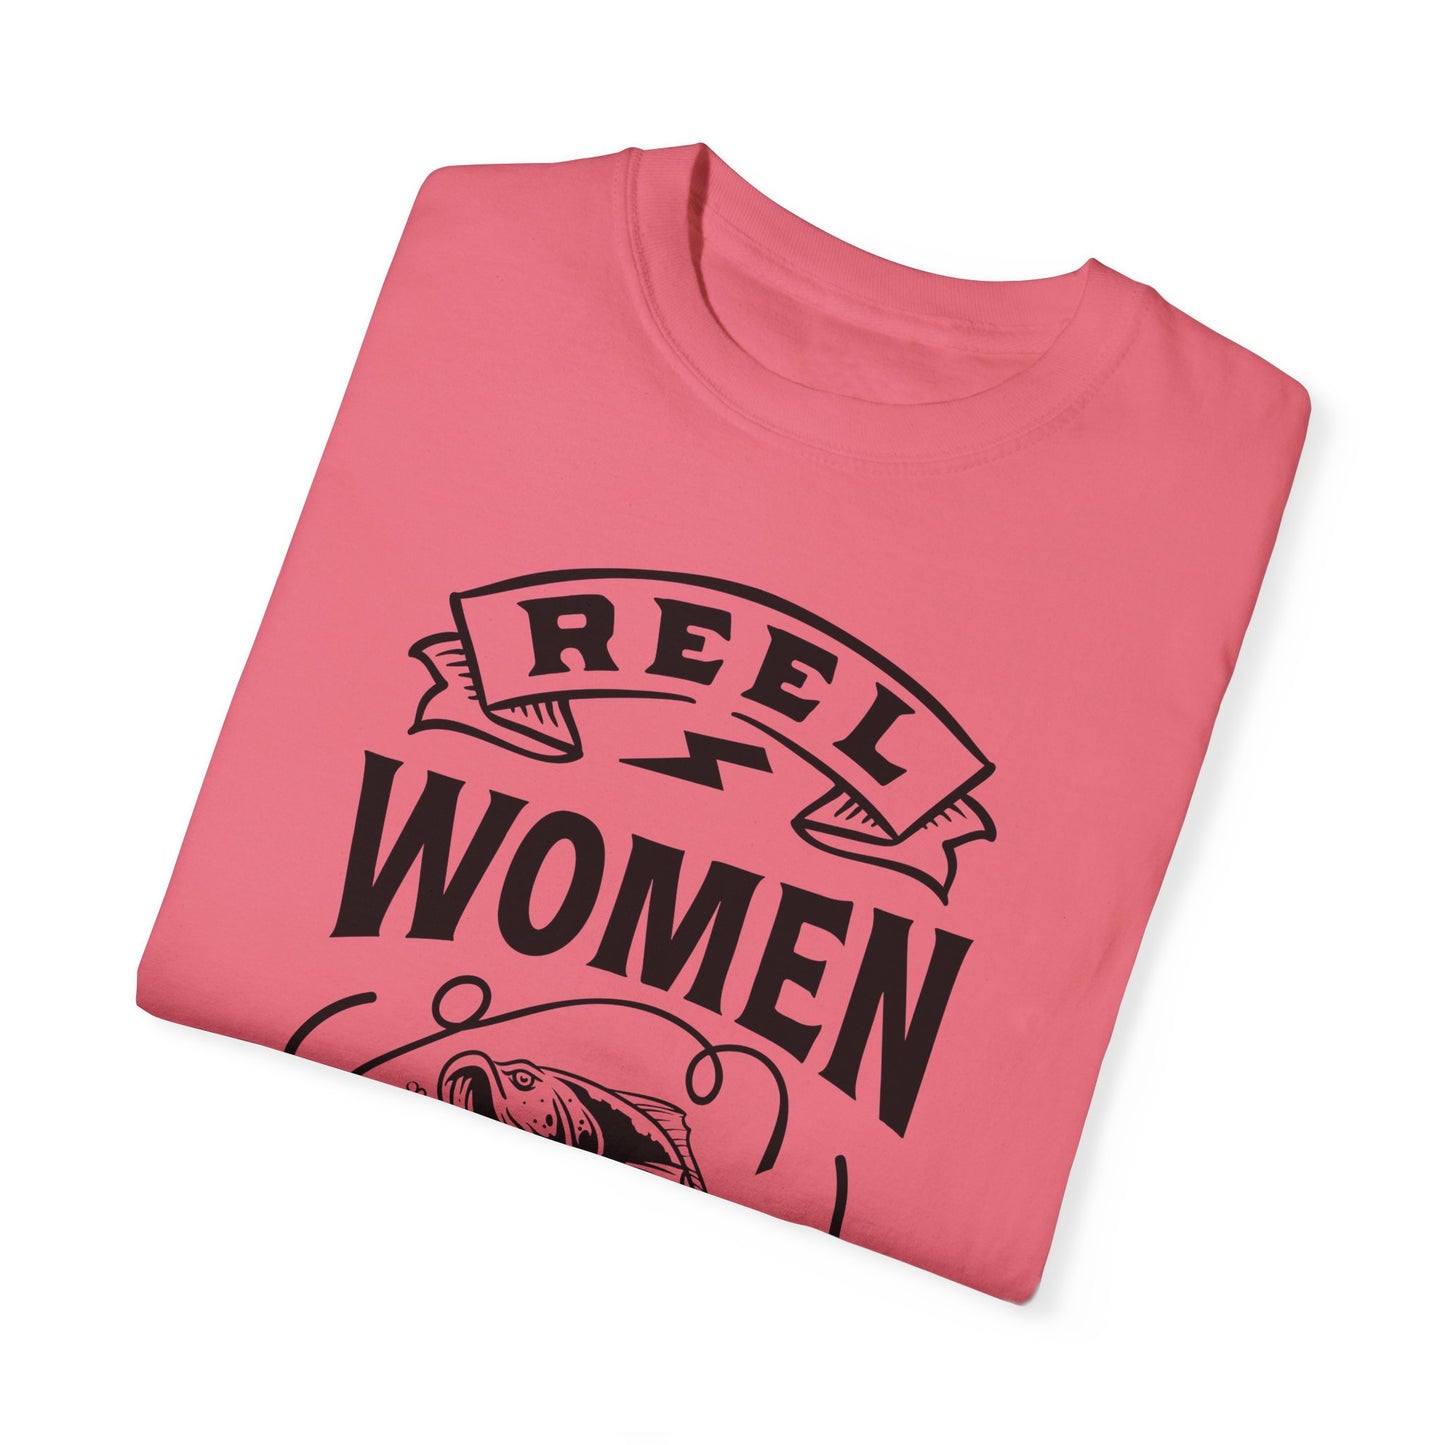 Reel women fish: Unisex Garment-Dyed T-shirt